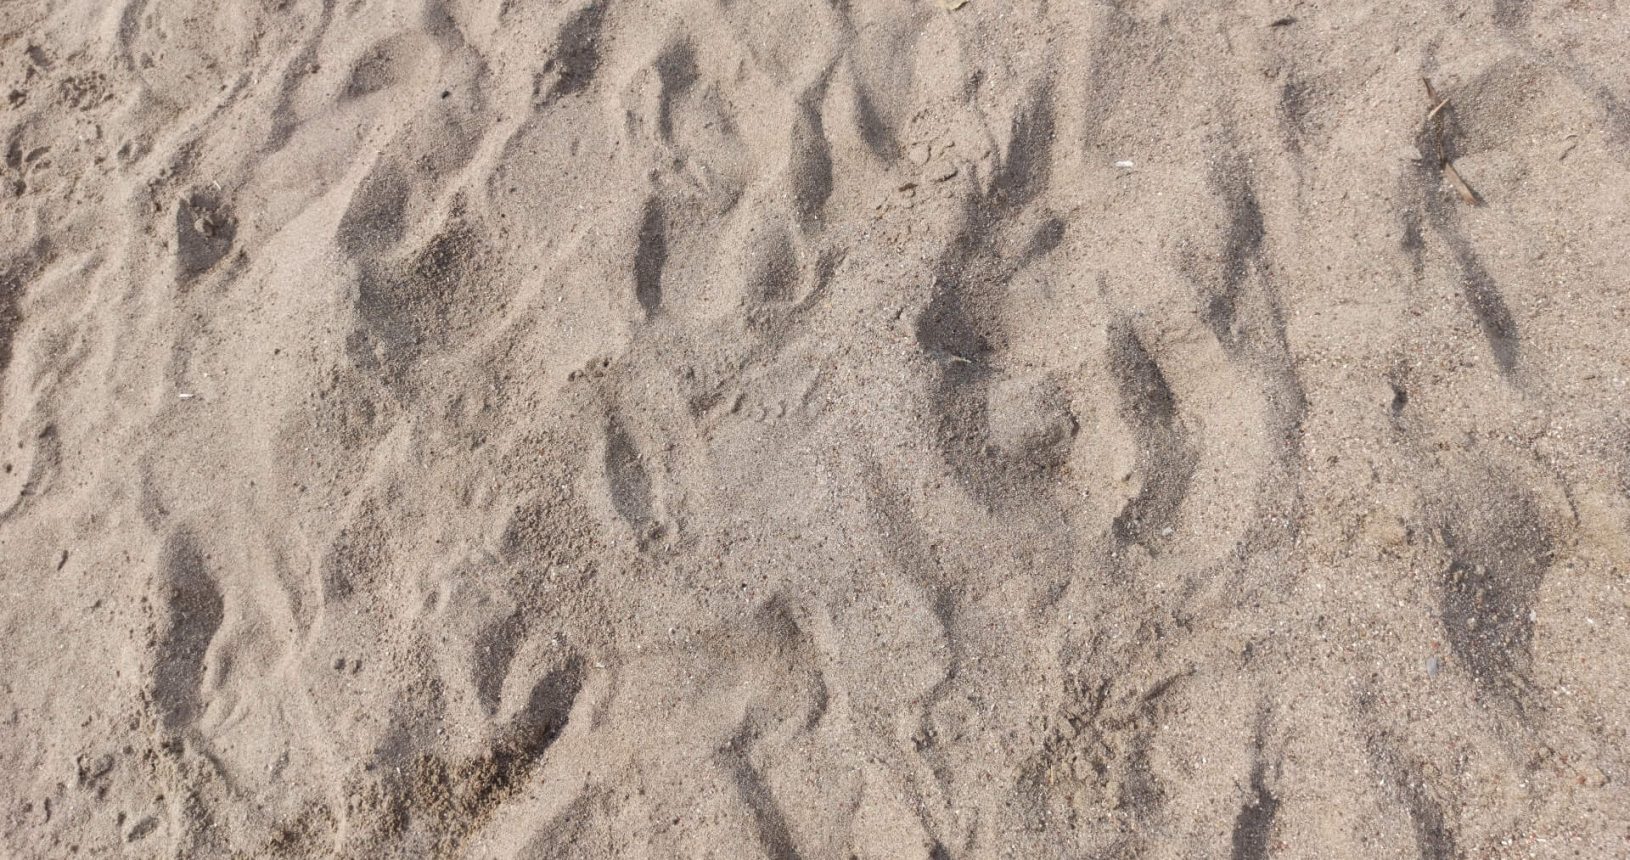 Luchica Beach sand